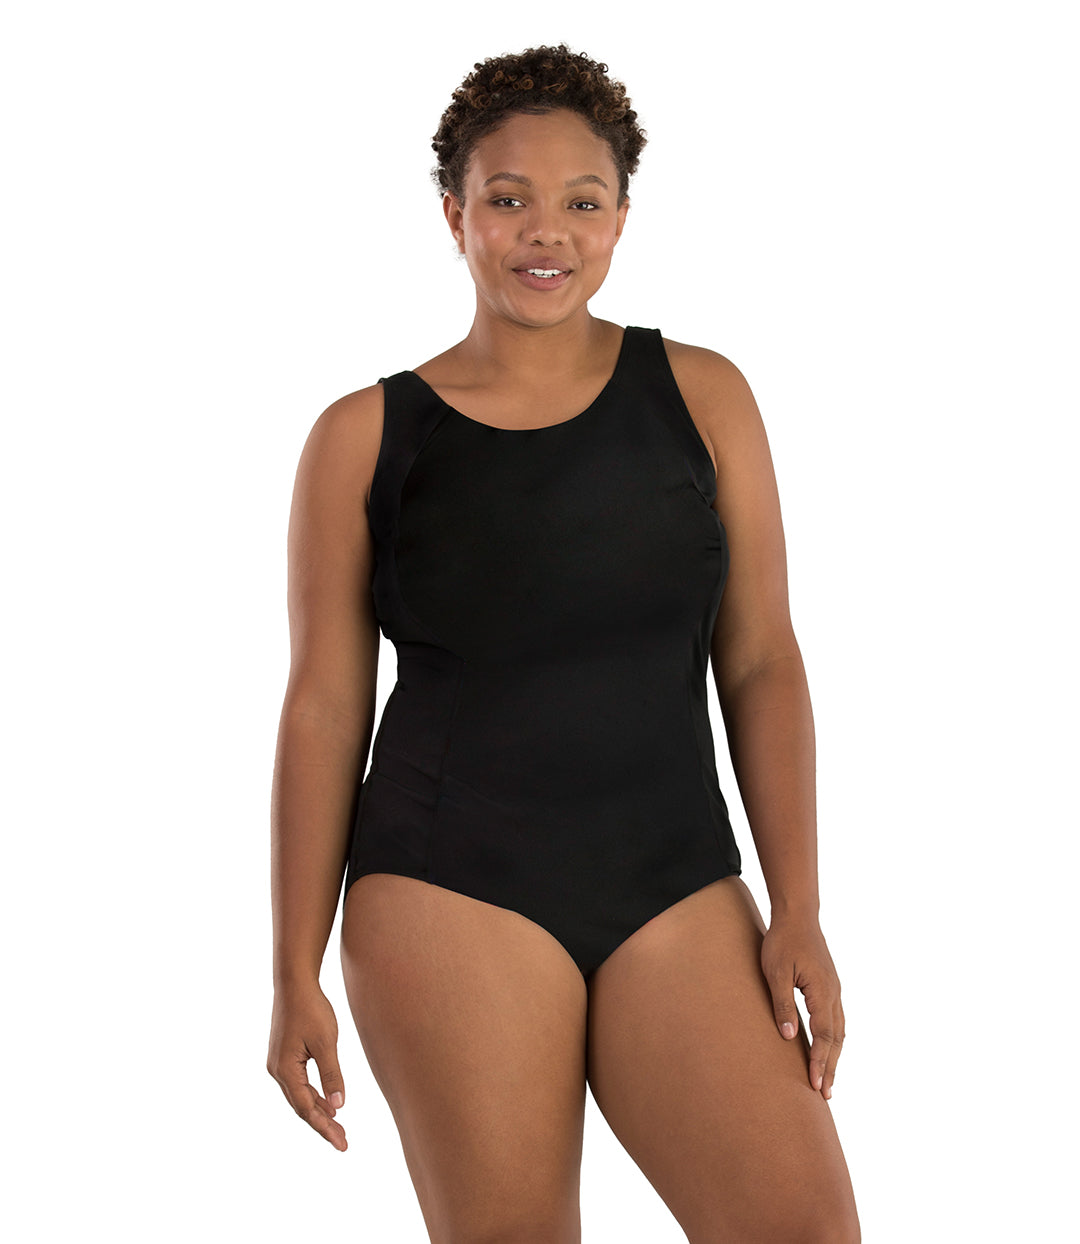 Planet kompression Making Plus Size Women's AquaSport Swimsuits | JunoActive